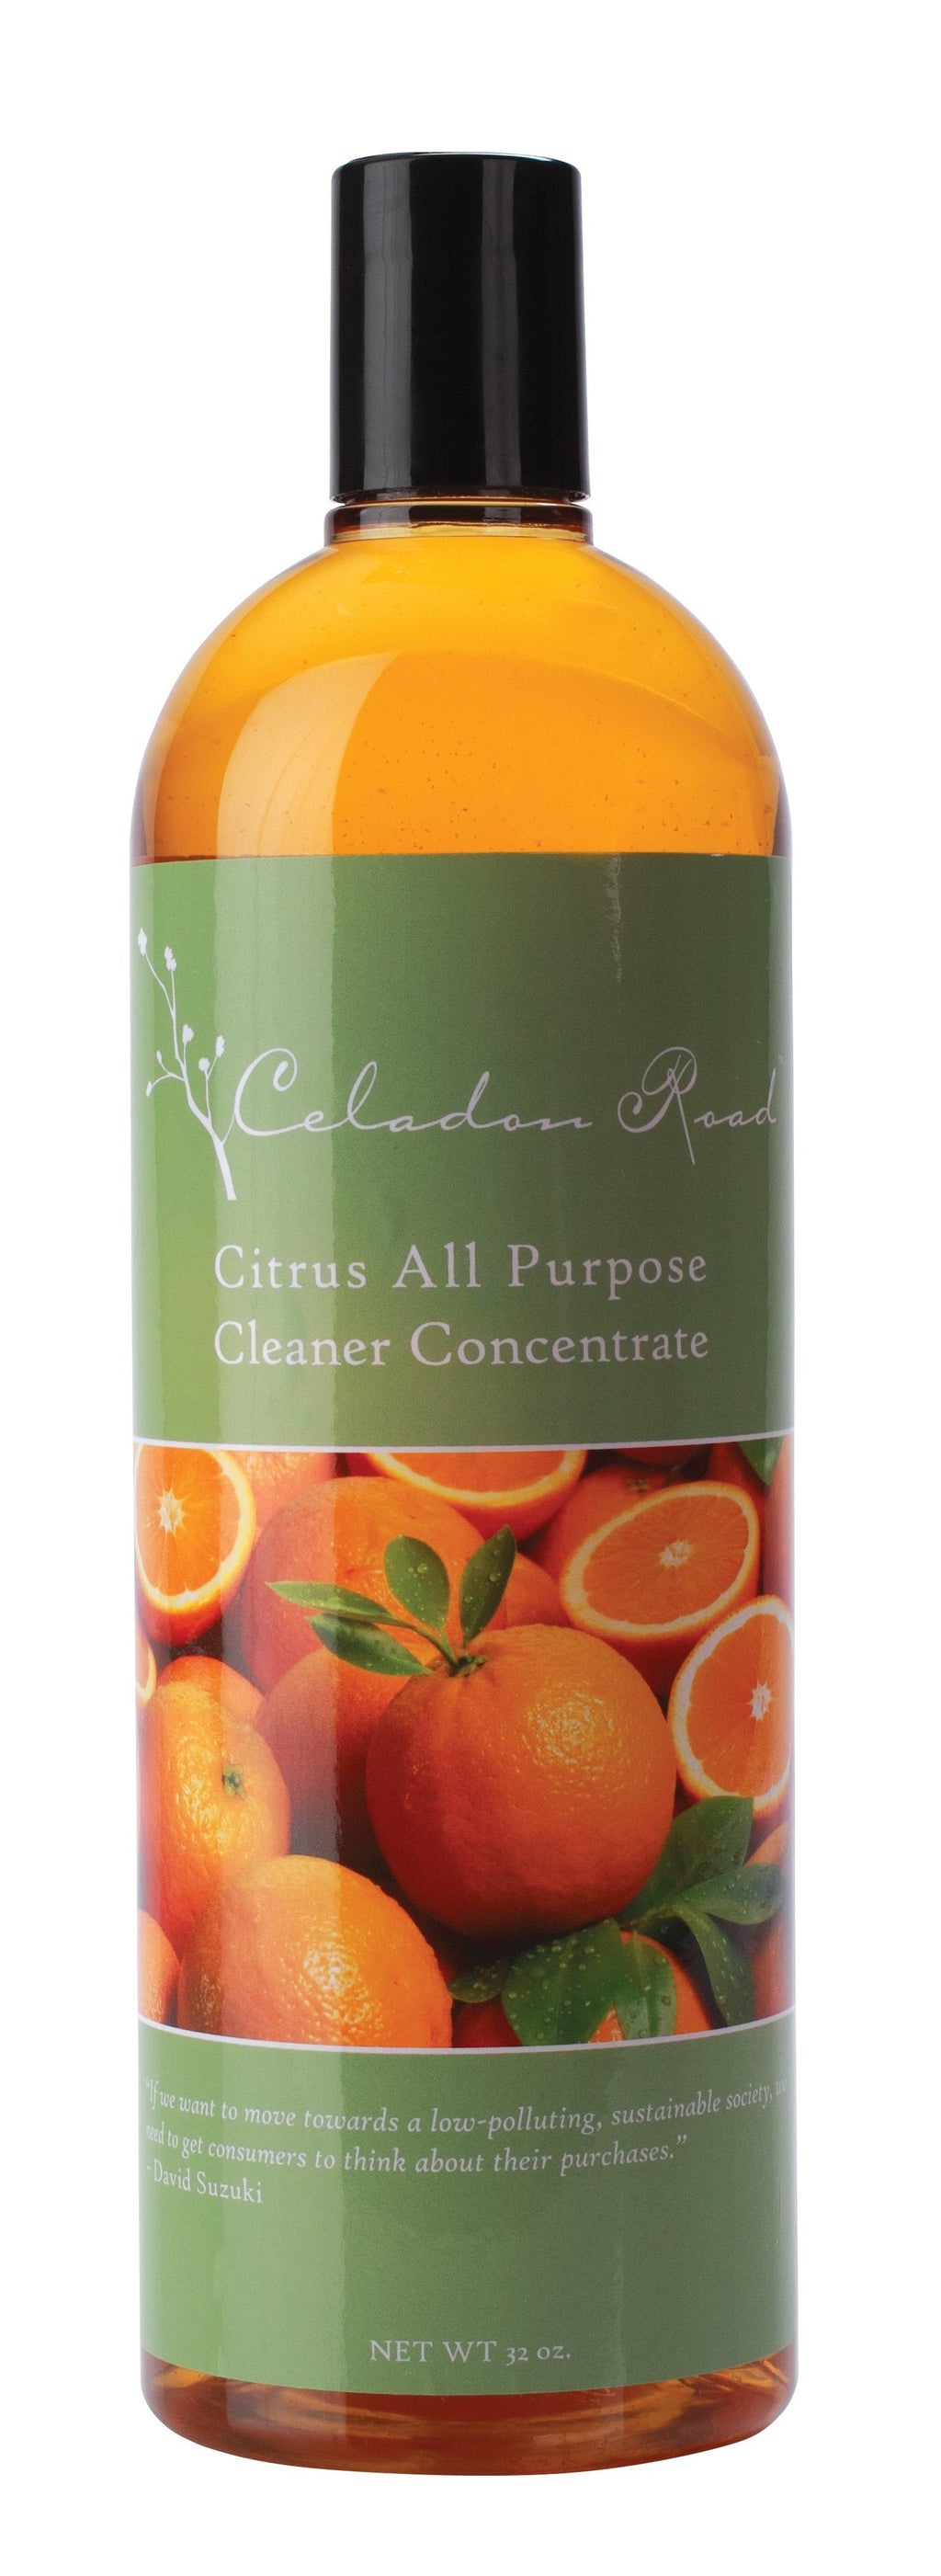 Citrus All Purpose Cleaner Concentrate- Celadon Road- www.celadonroad.com